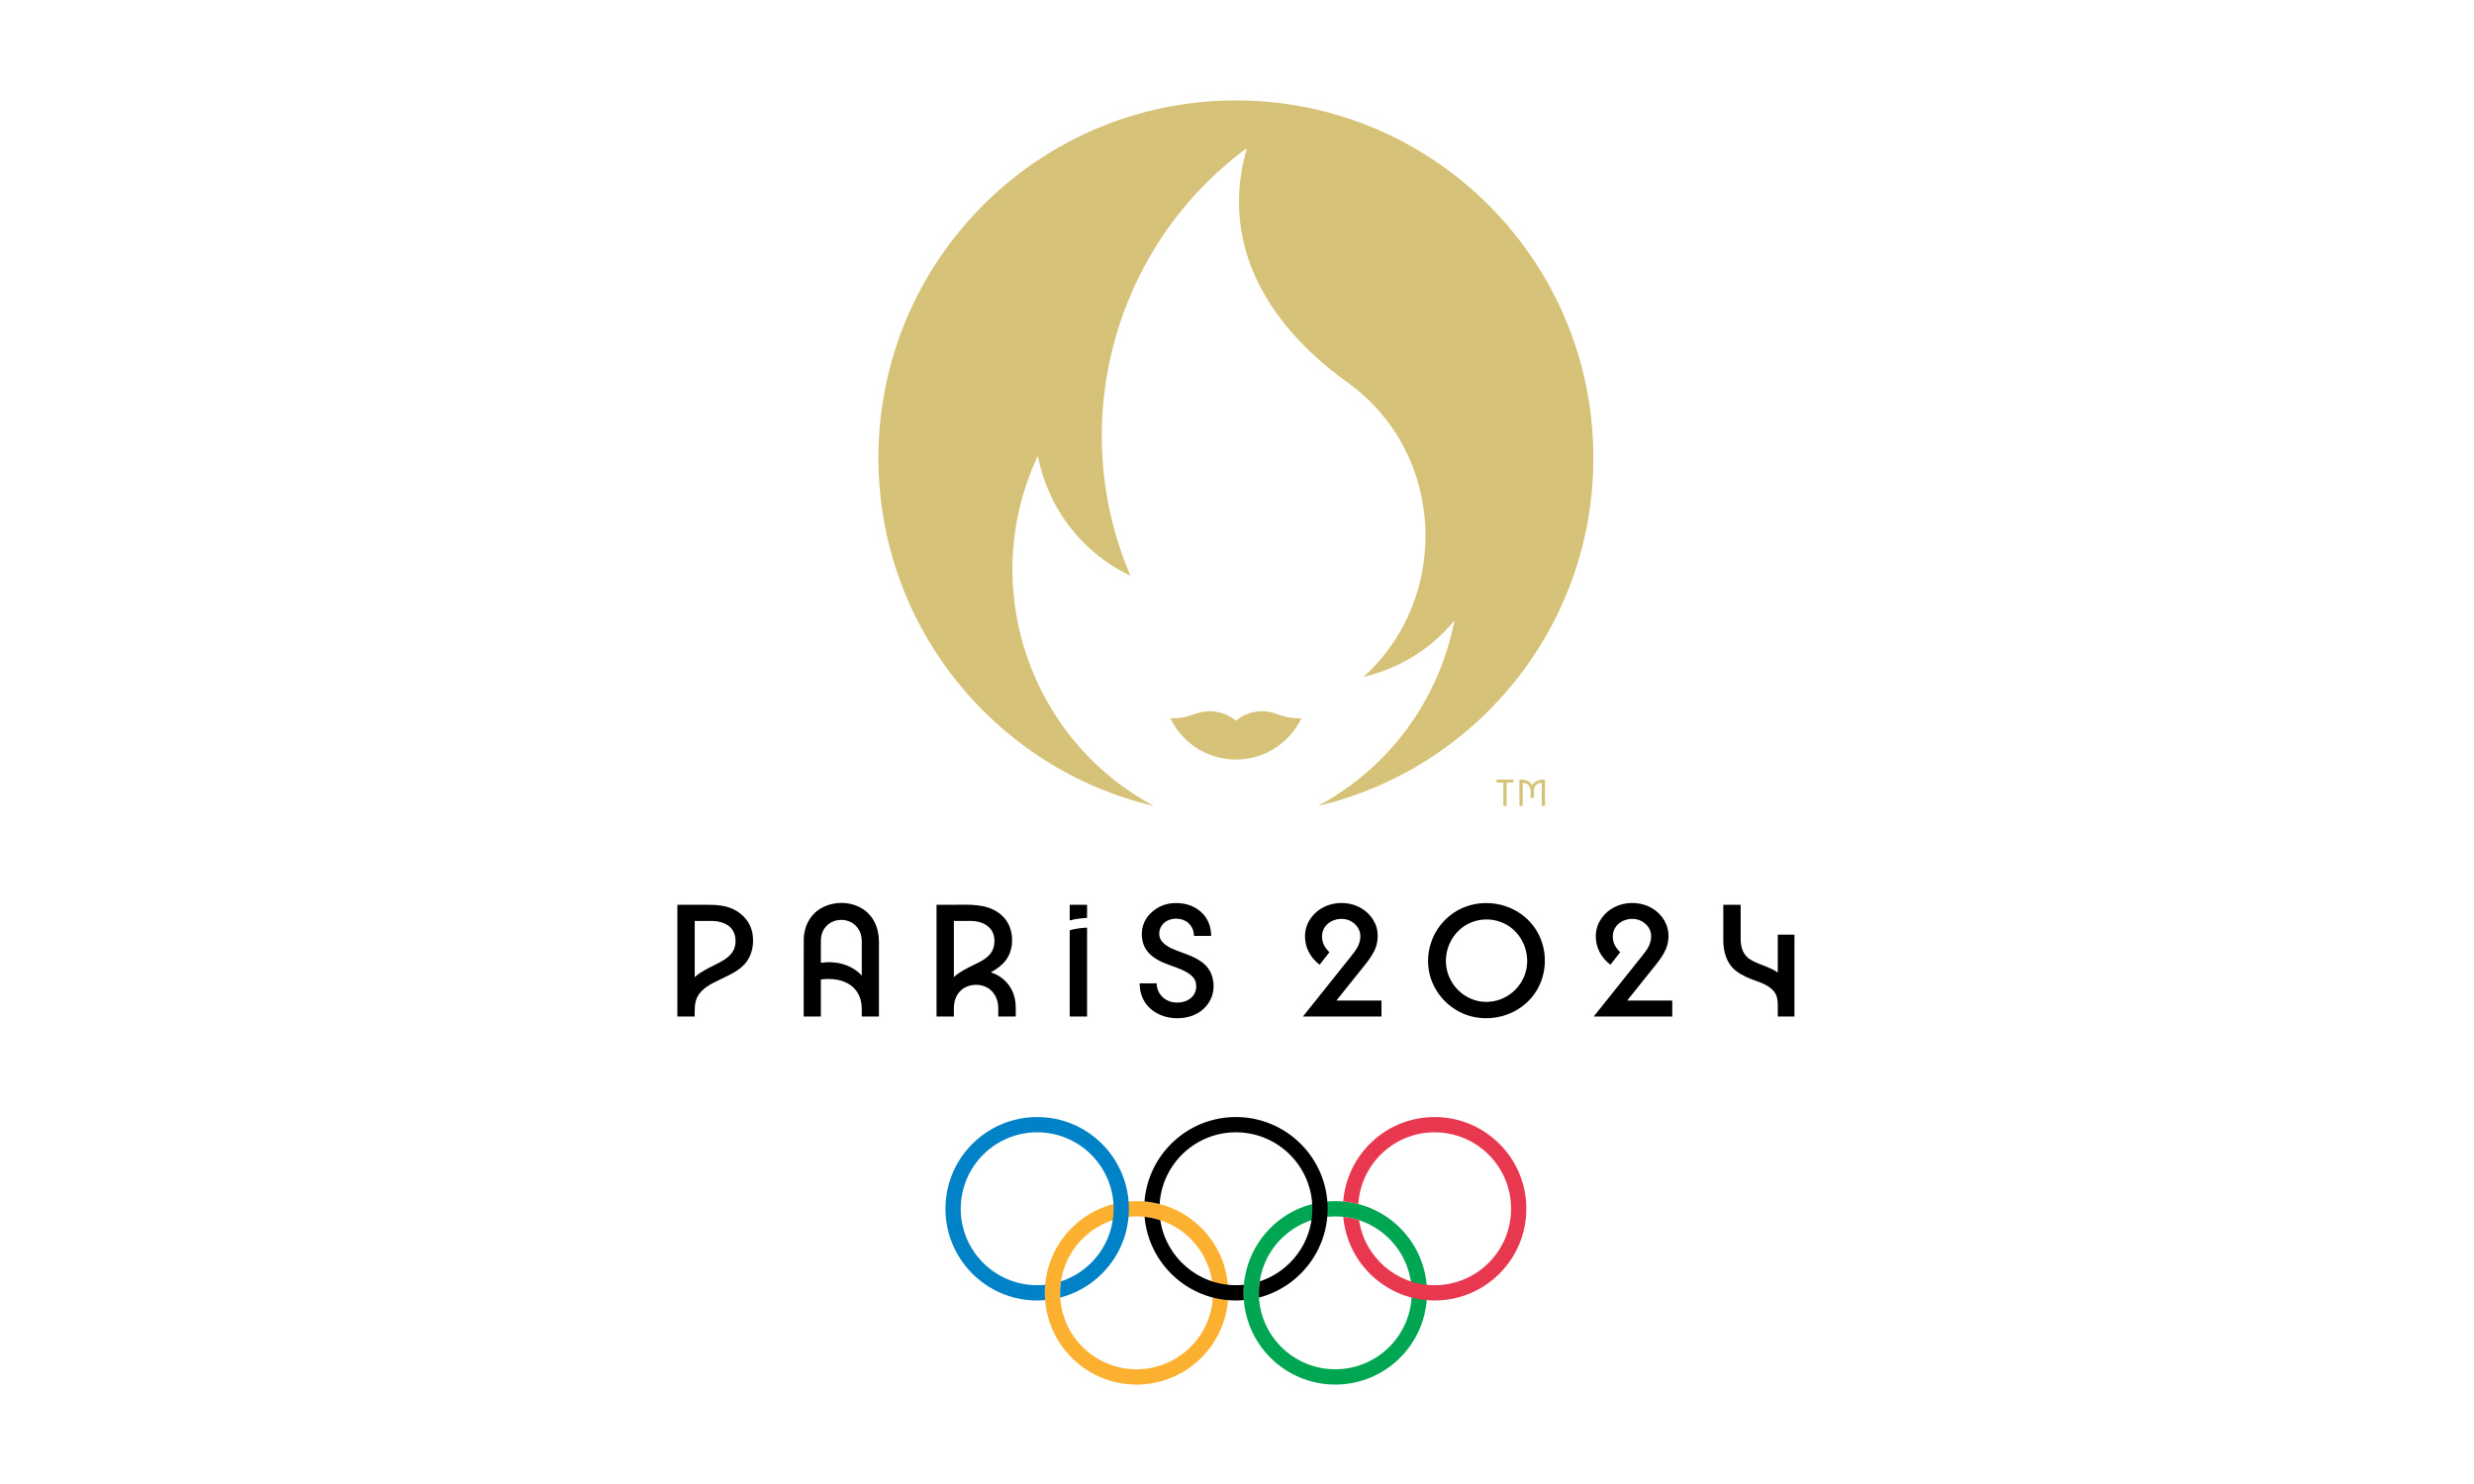 Paris 2024 Olympic games brand